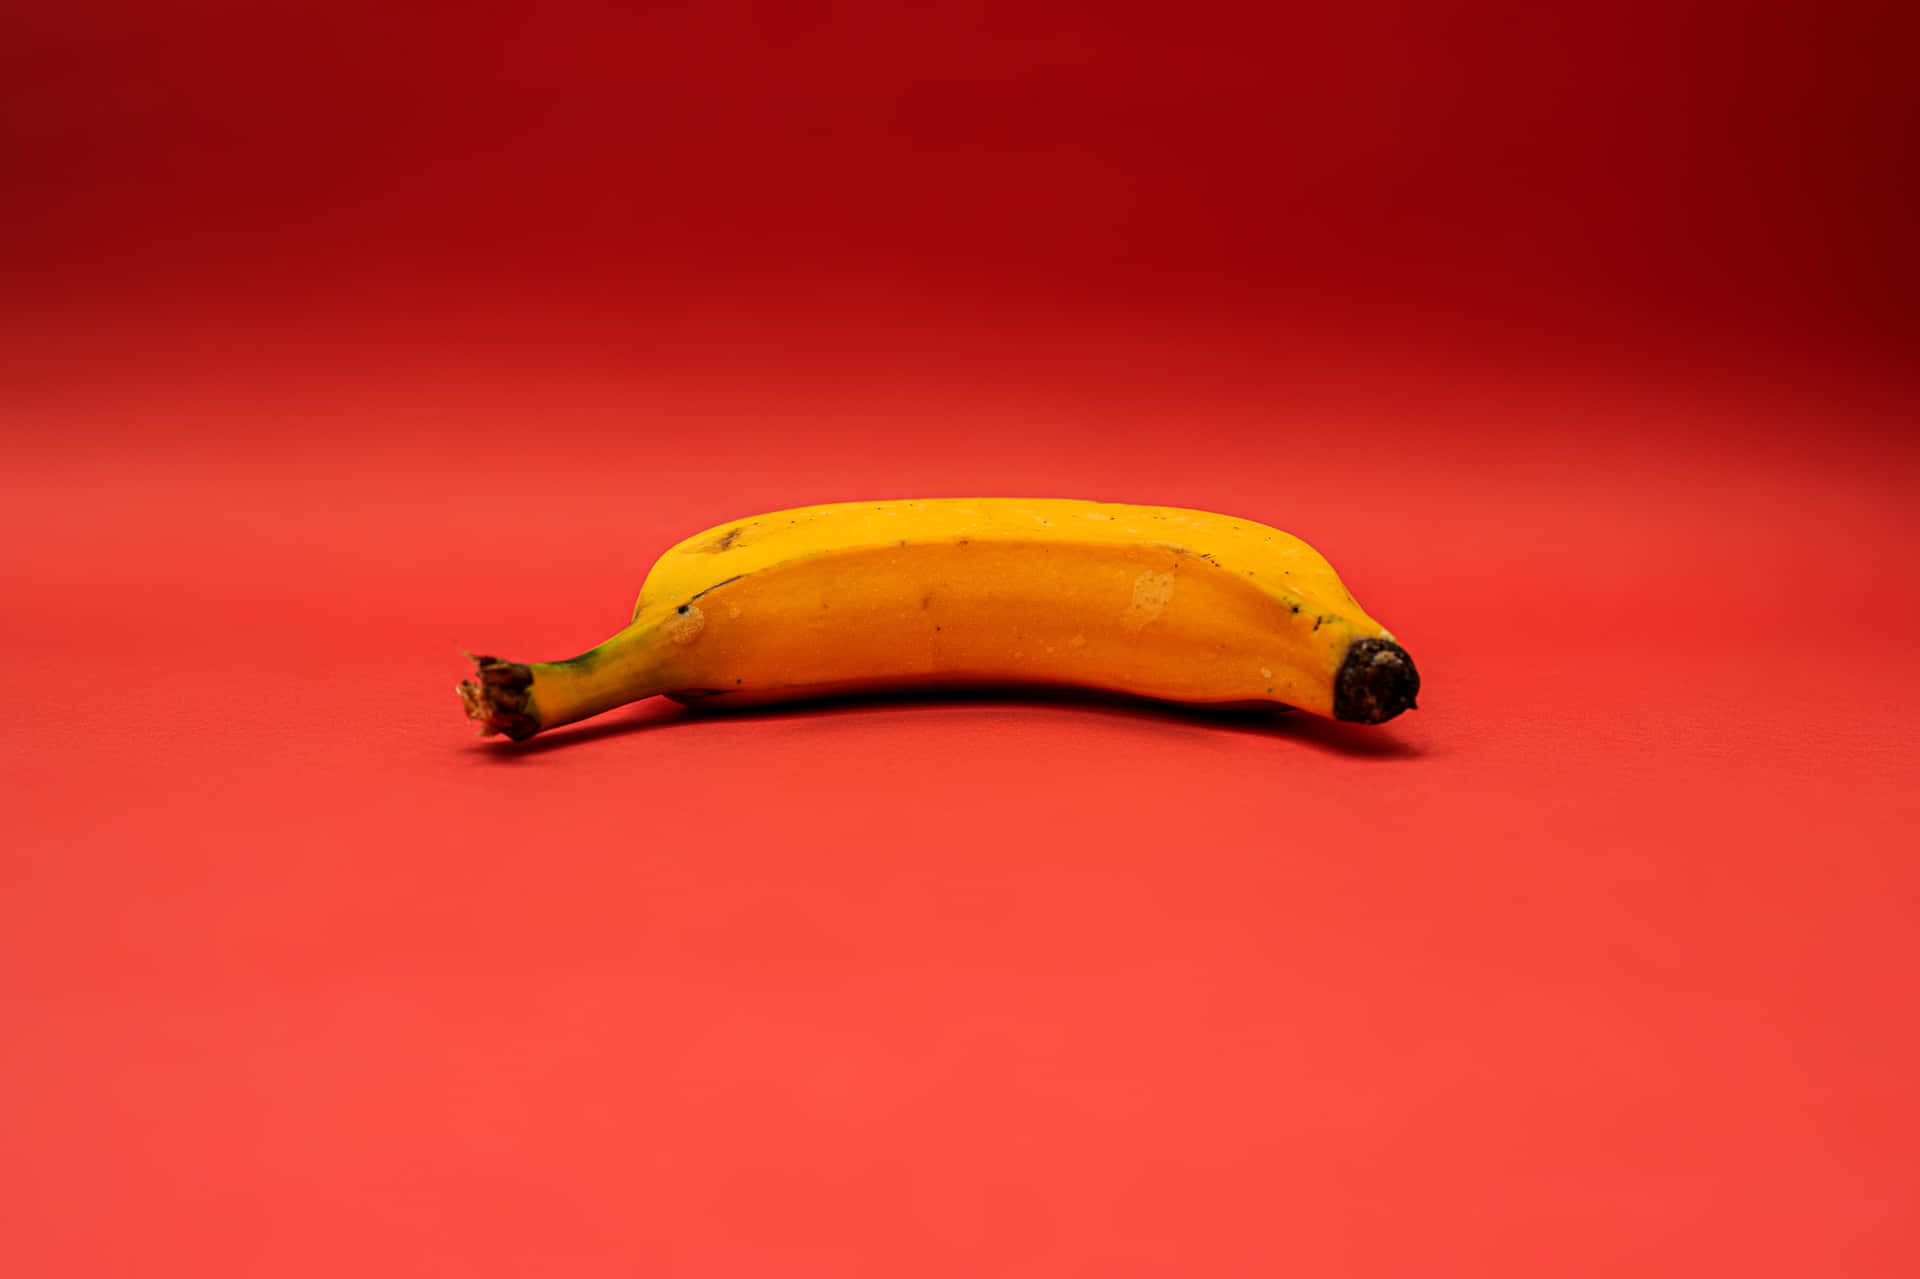 Banana - The Iconic Fruit